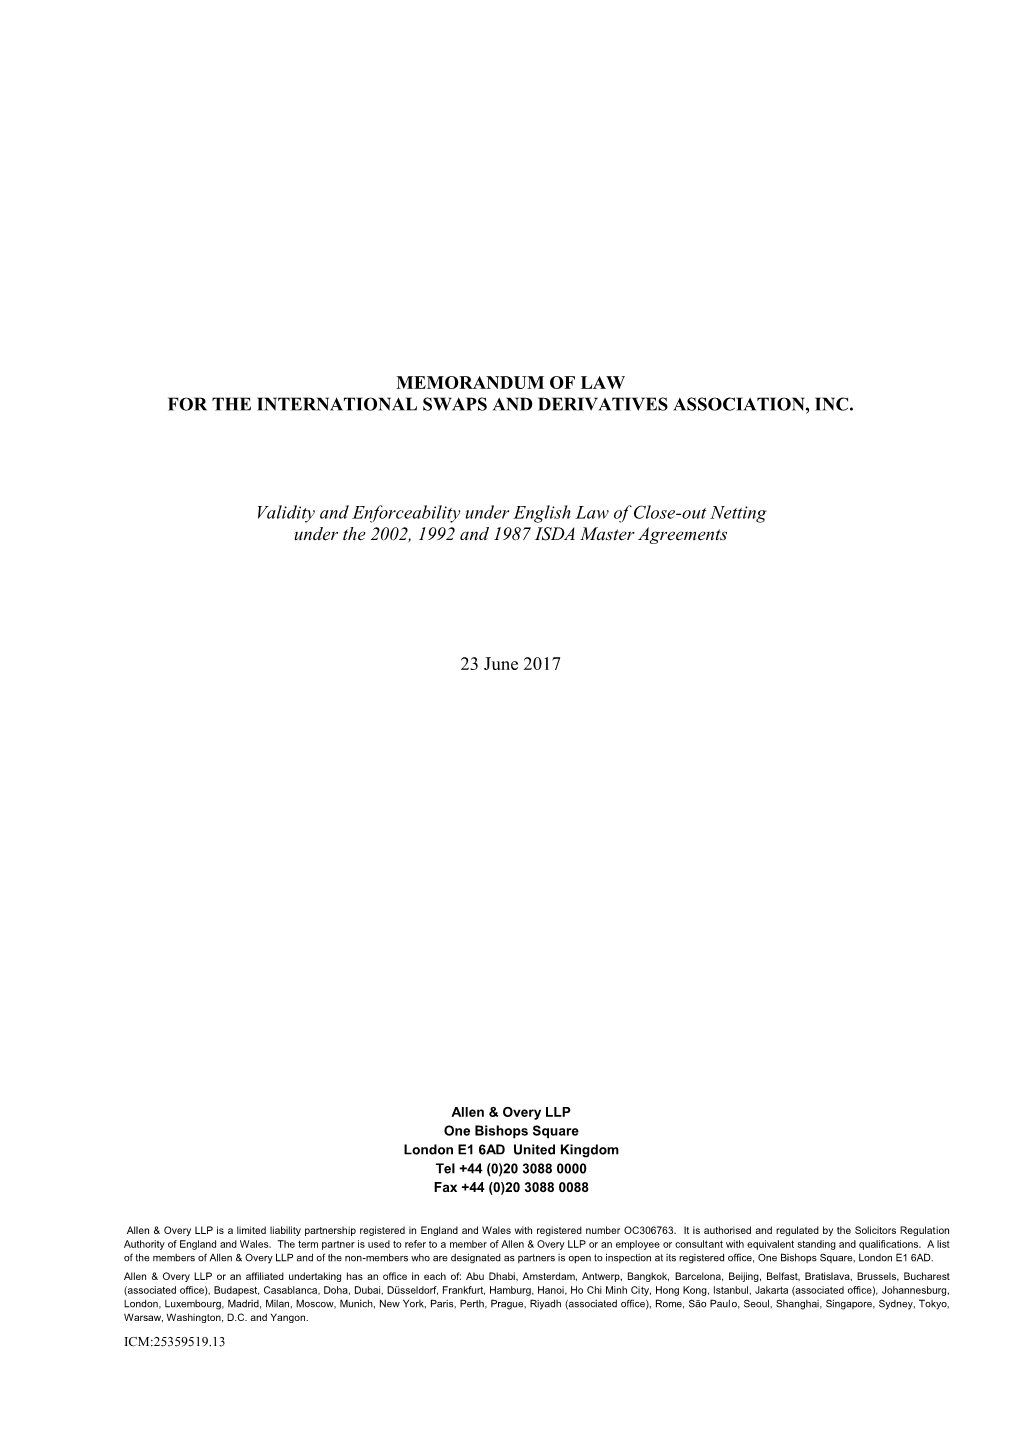 Memorandum of Law for the International Swaps and Derivatives Association, Inc